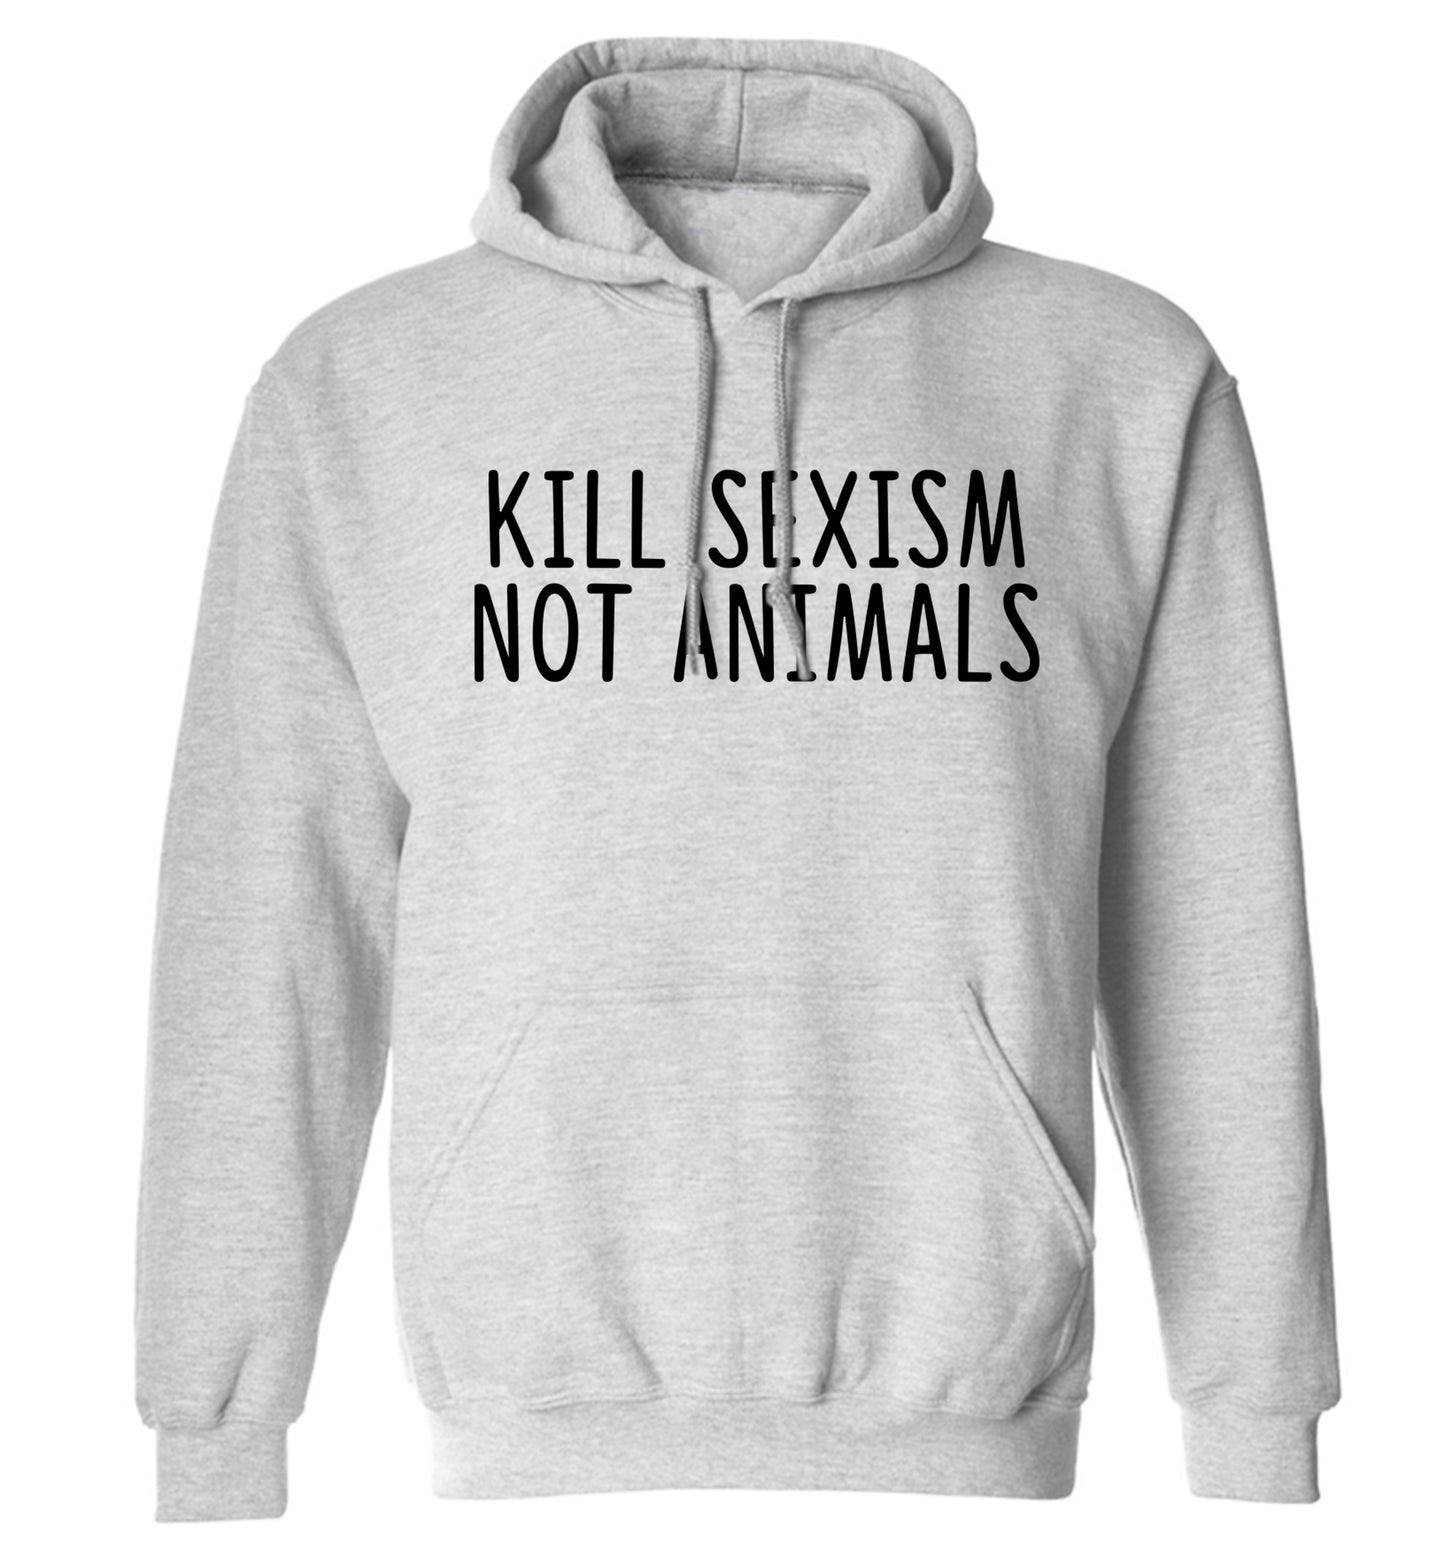 Kill Sexism Not Animals adults unisex grey hoodie 2XL